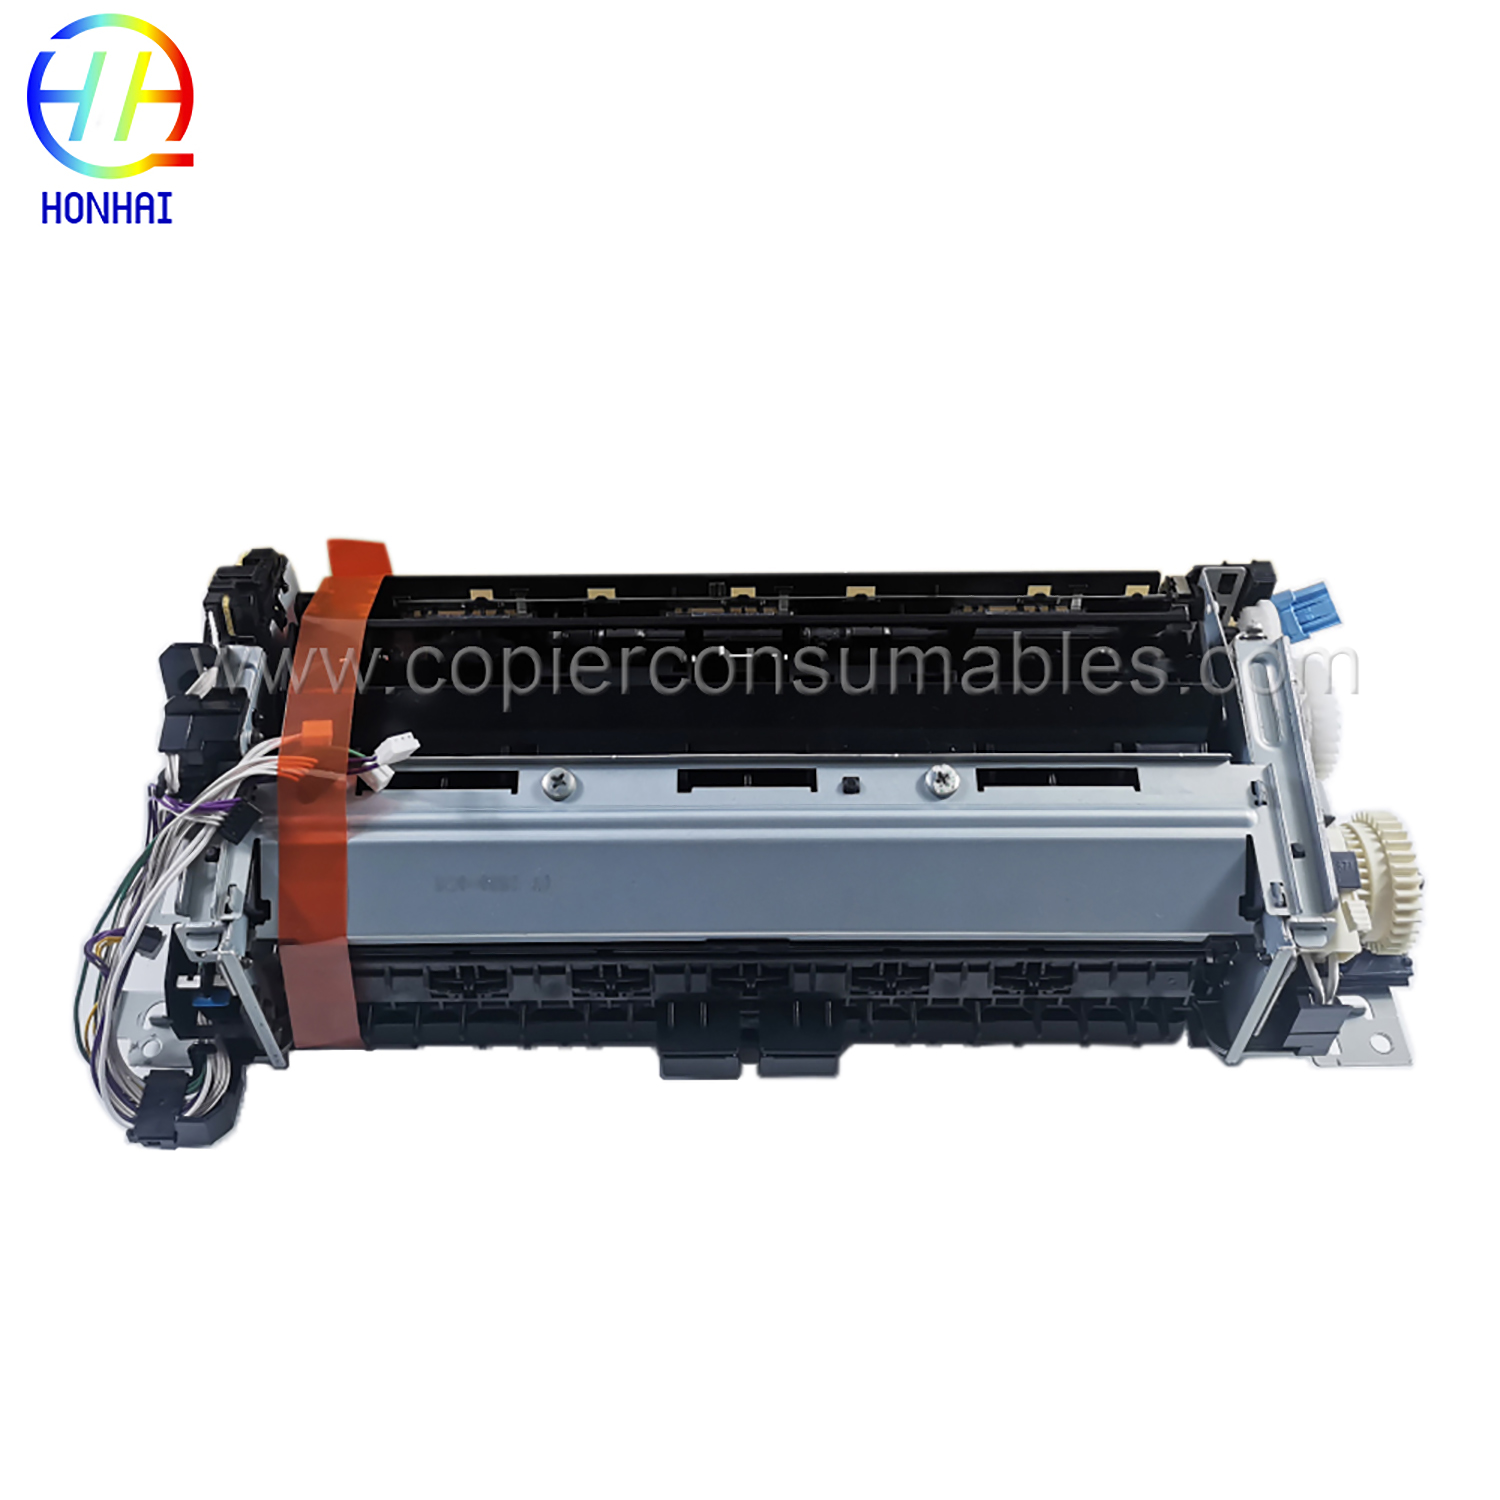 HP Color LaserJet Enterprise M455dn Pro M452dn M452dw M454dn M454dw Pro MFP M377dw M477fdn M477fdw M479fdn 110 В 220 В термобекіткіш (бекіту) бөлігі